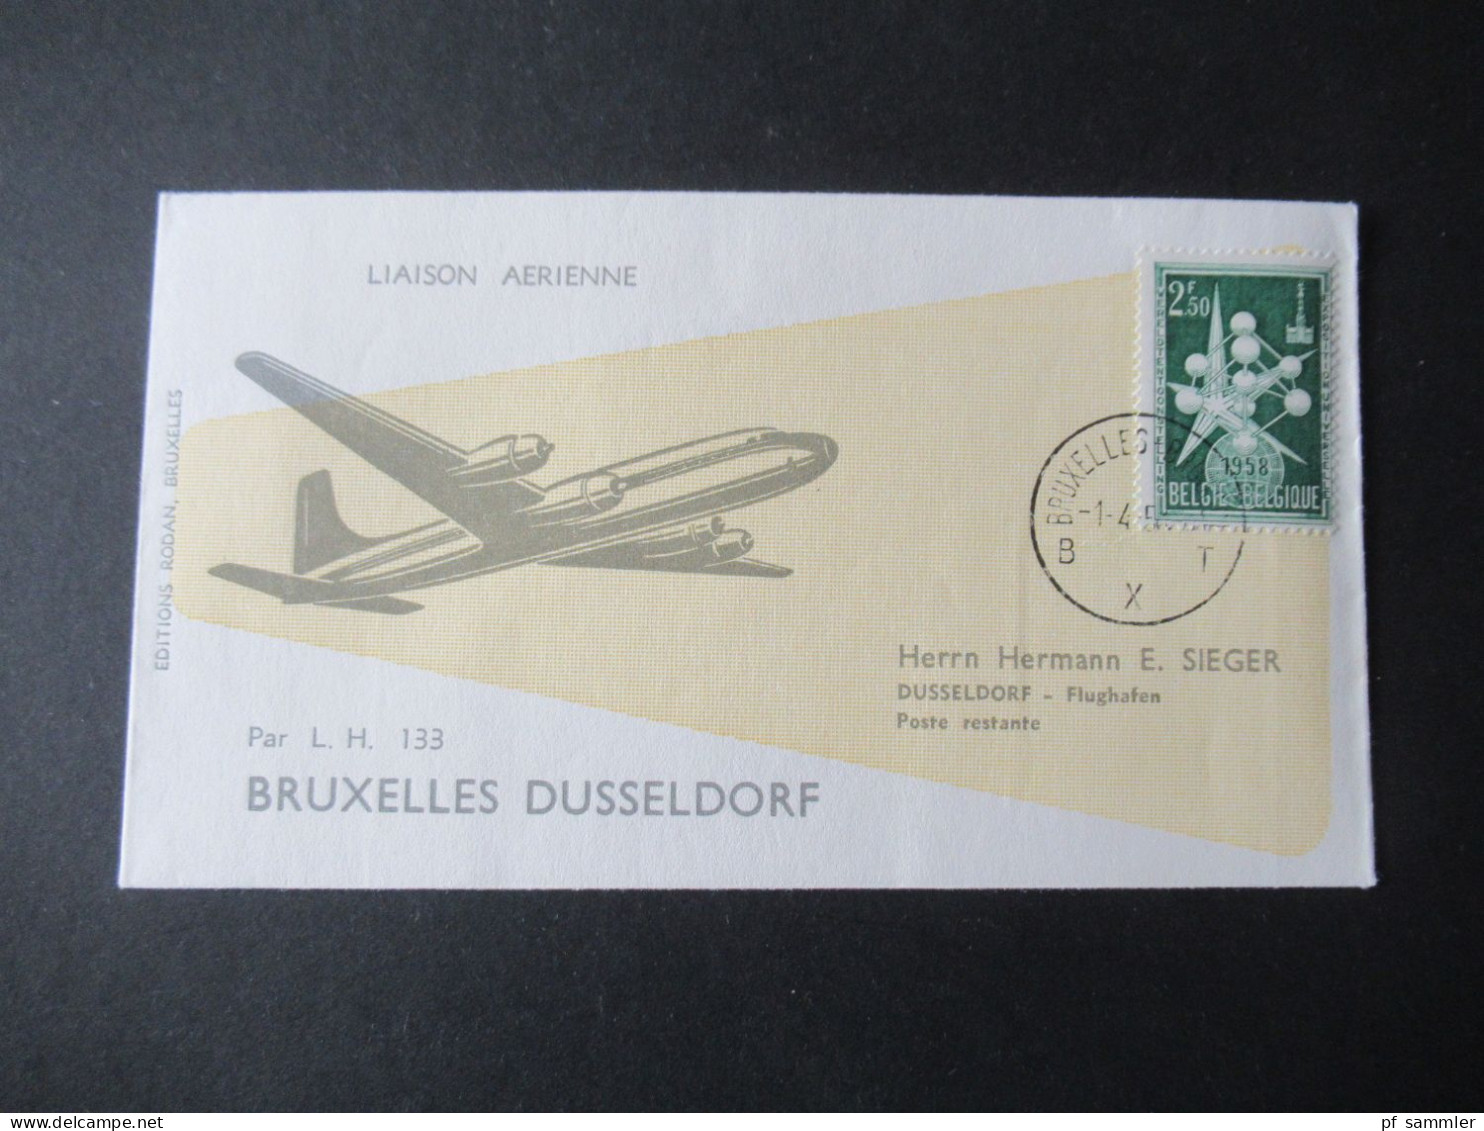 Belgien 1958 Erstflug / First Flight Deutsche Lufthansa LH 133 Bruxelles - Düsseldorf / Hermann E. Sieger Beleg - Lettres & Documents